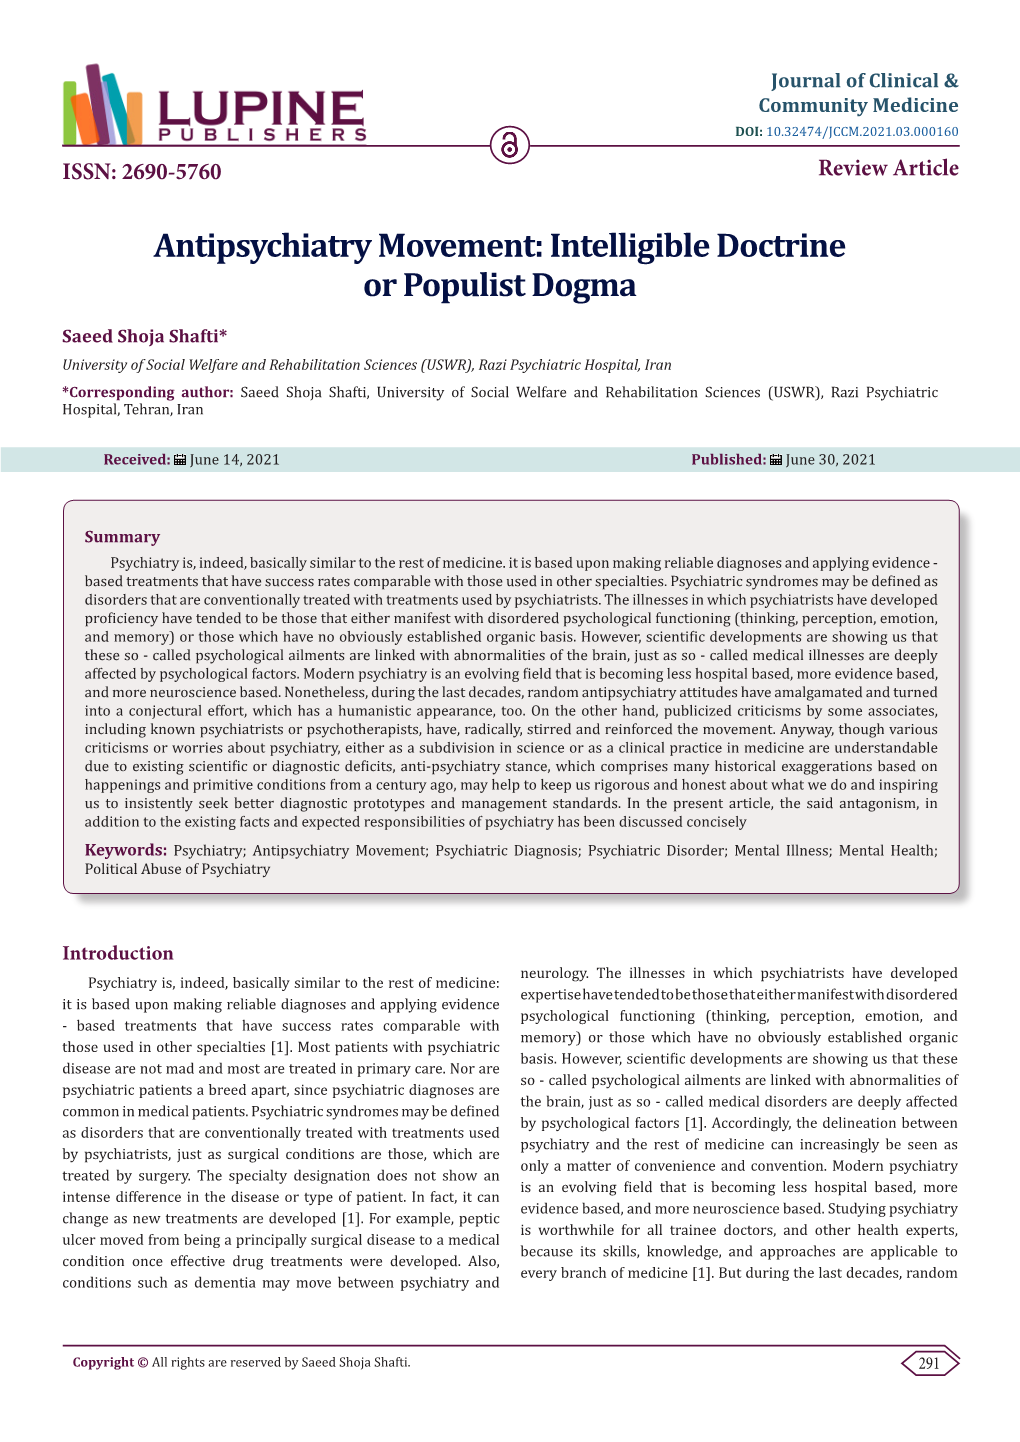 Antipsychiatry Movement: Intelligible Doctrine Or Populist Dogma